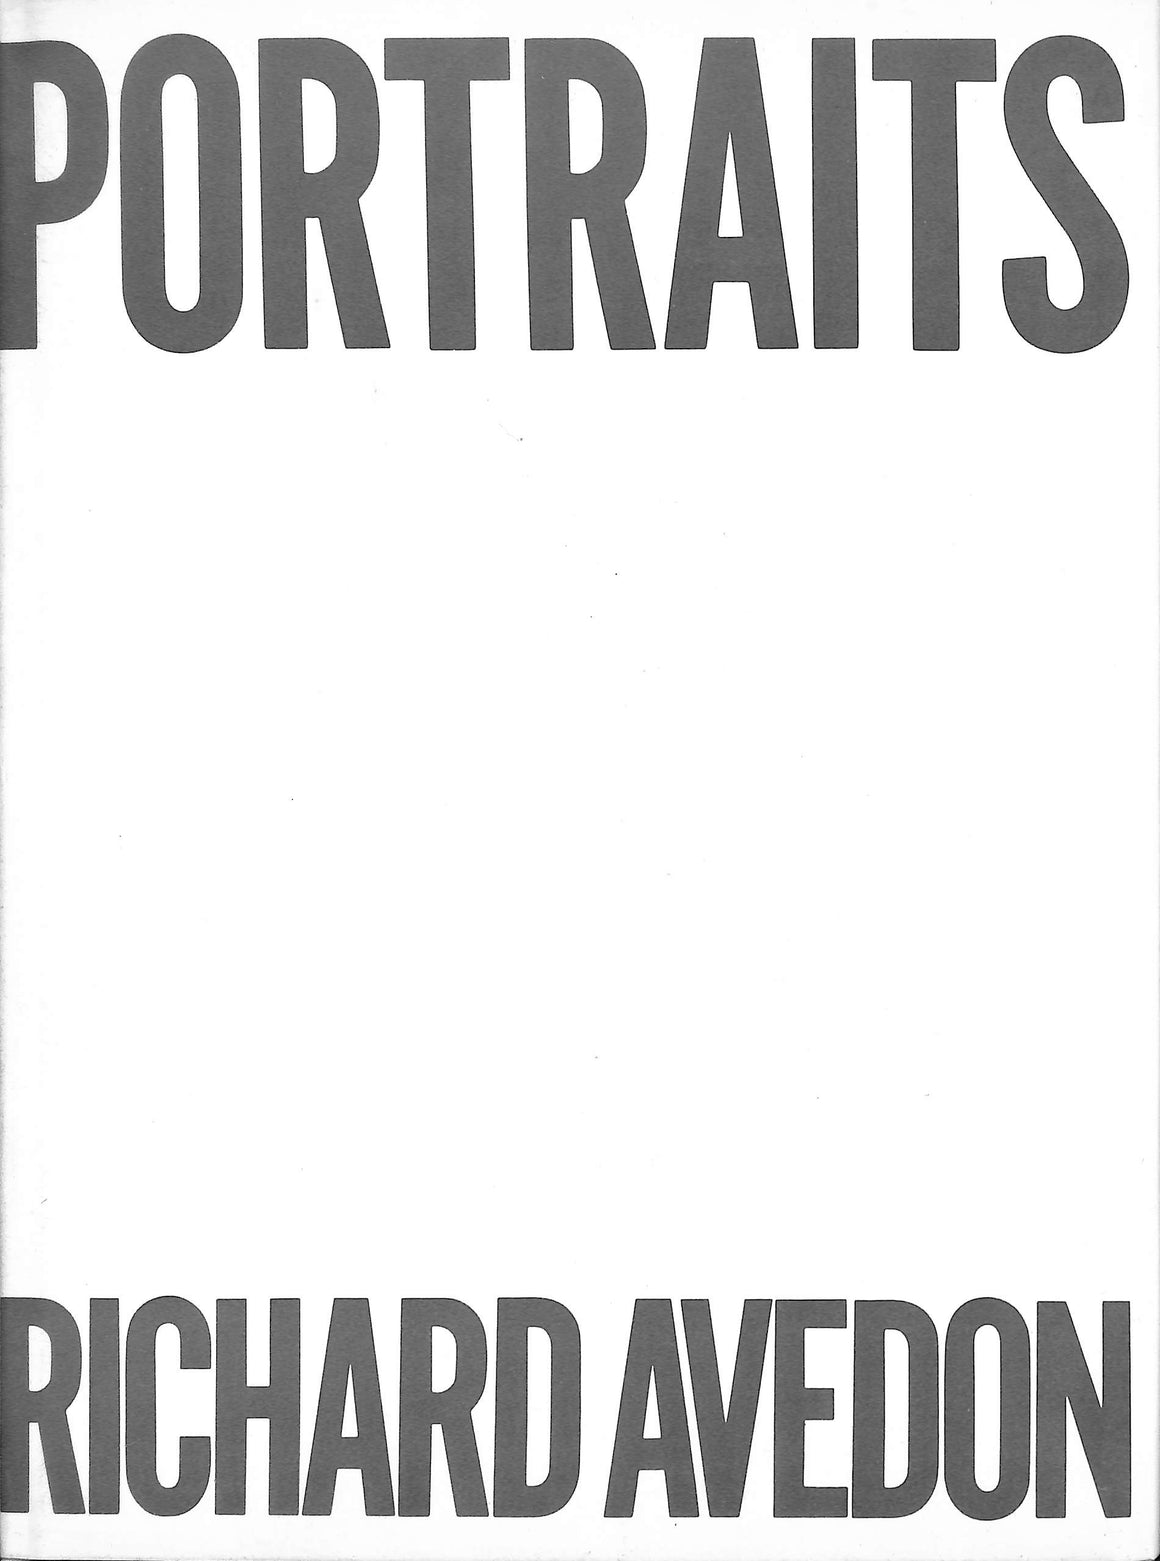 "Portraits" 1976 AVEDON, Richard (INSCRIBED)